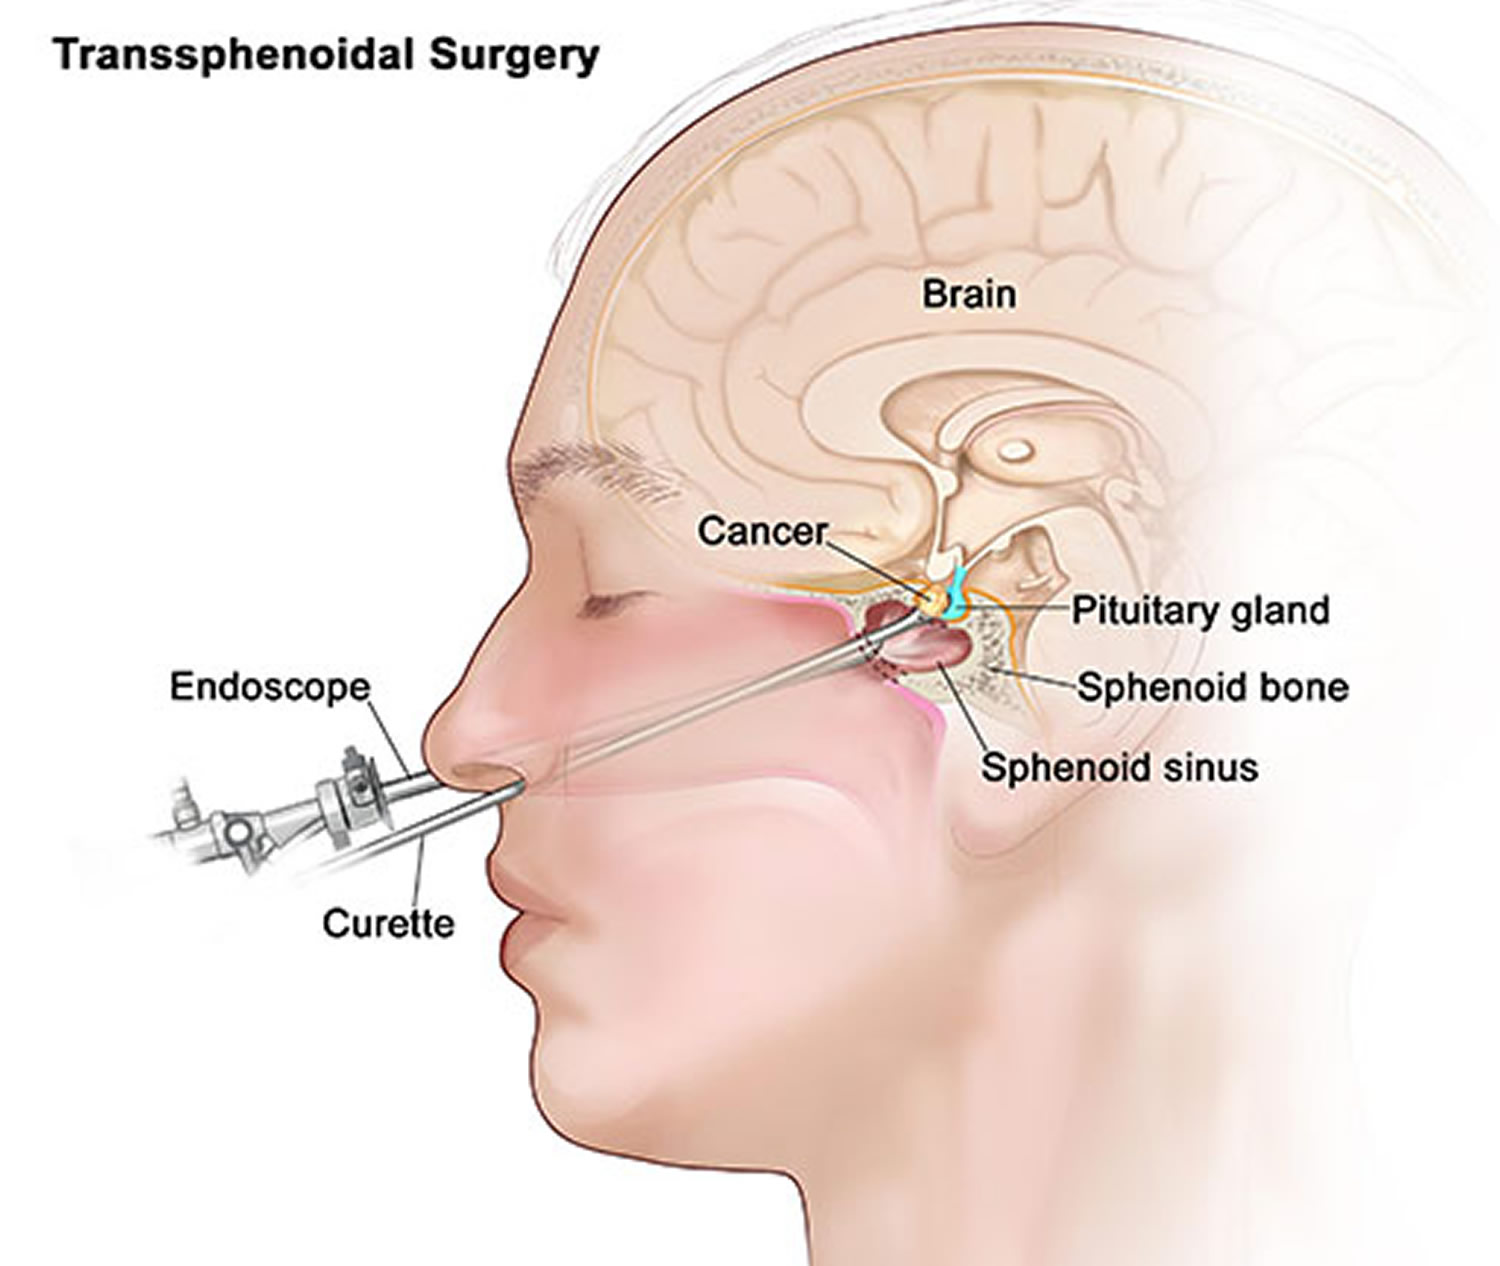 Pituitary Tumor - Signs, Symptoms, Diagnosis, MRI, Surgery & Treatment